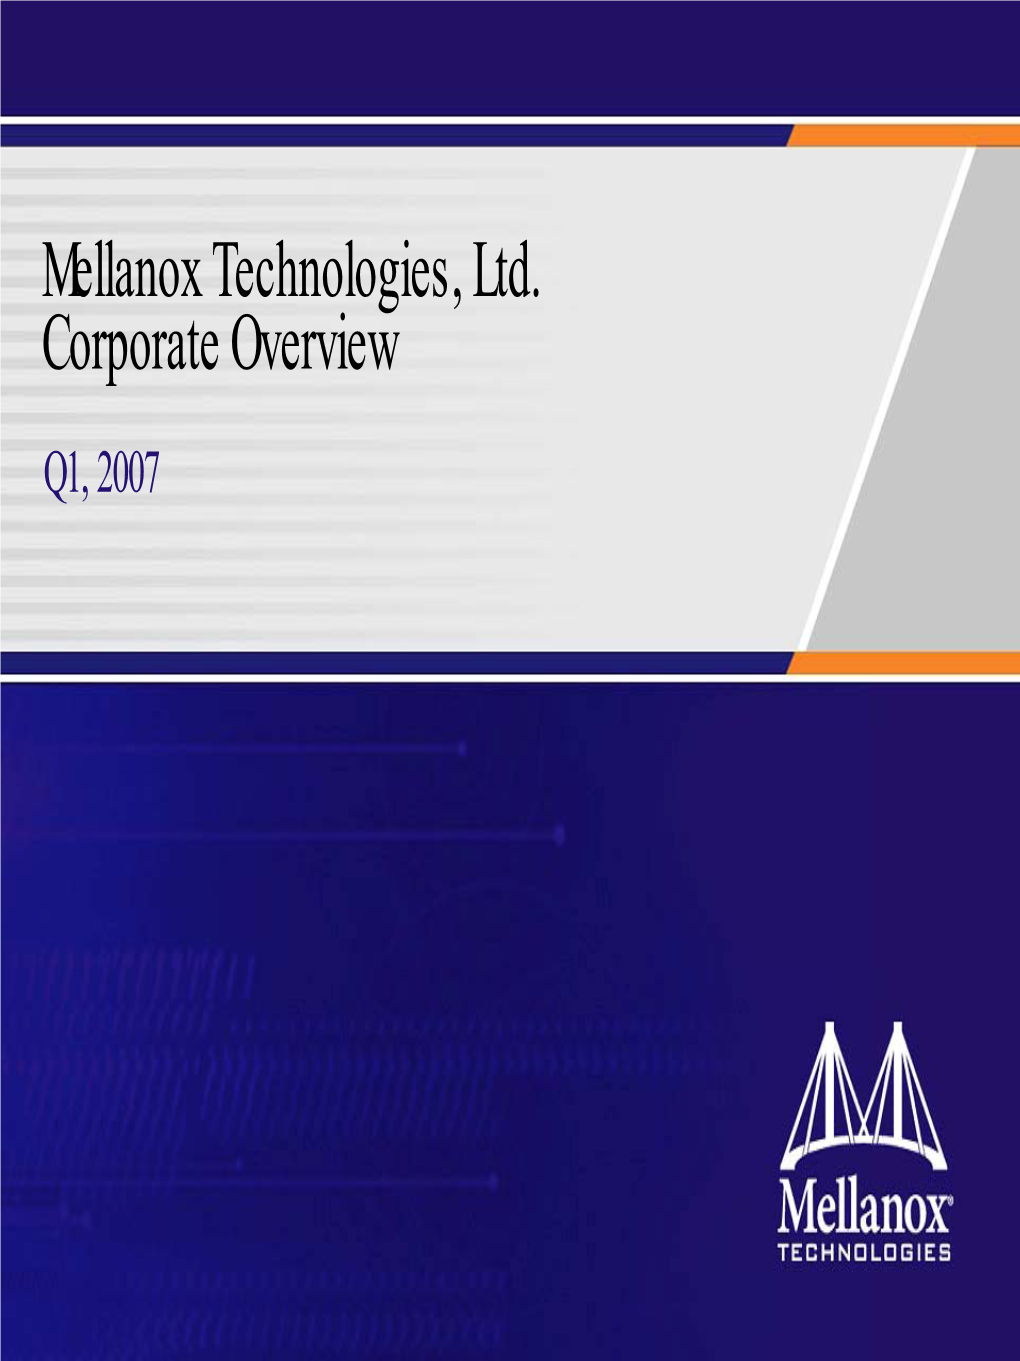 Mellanox Corporate Pitch